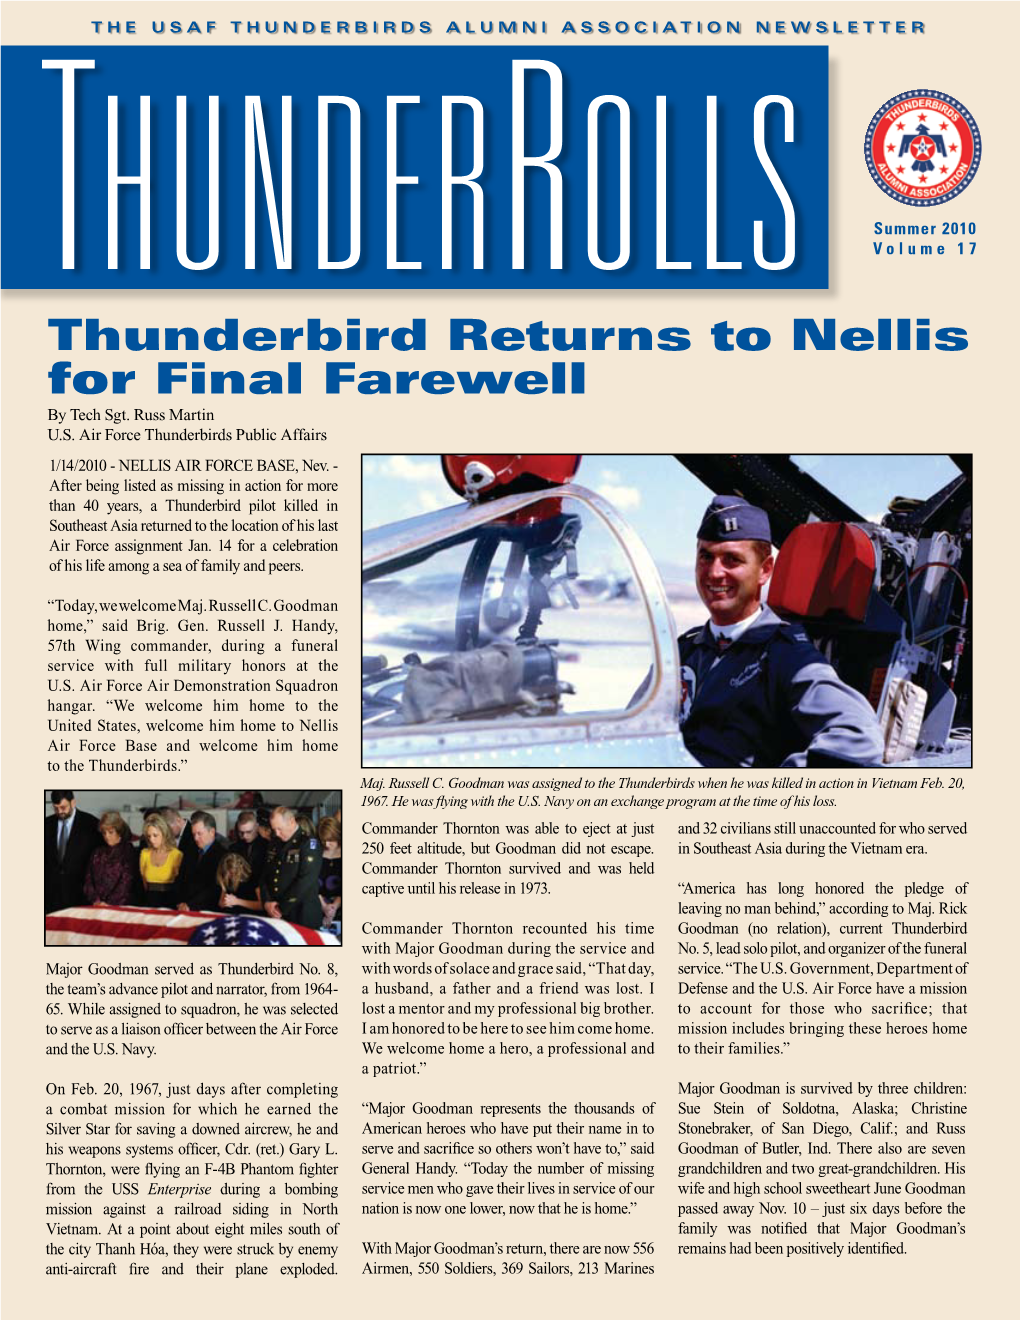 Thunderbird Returns to Nellis for Final Farewell by Tech Sgt